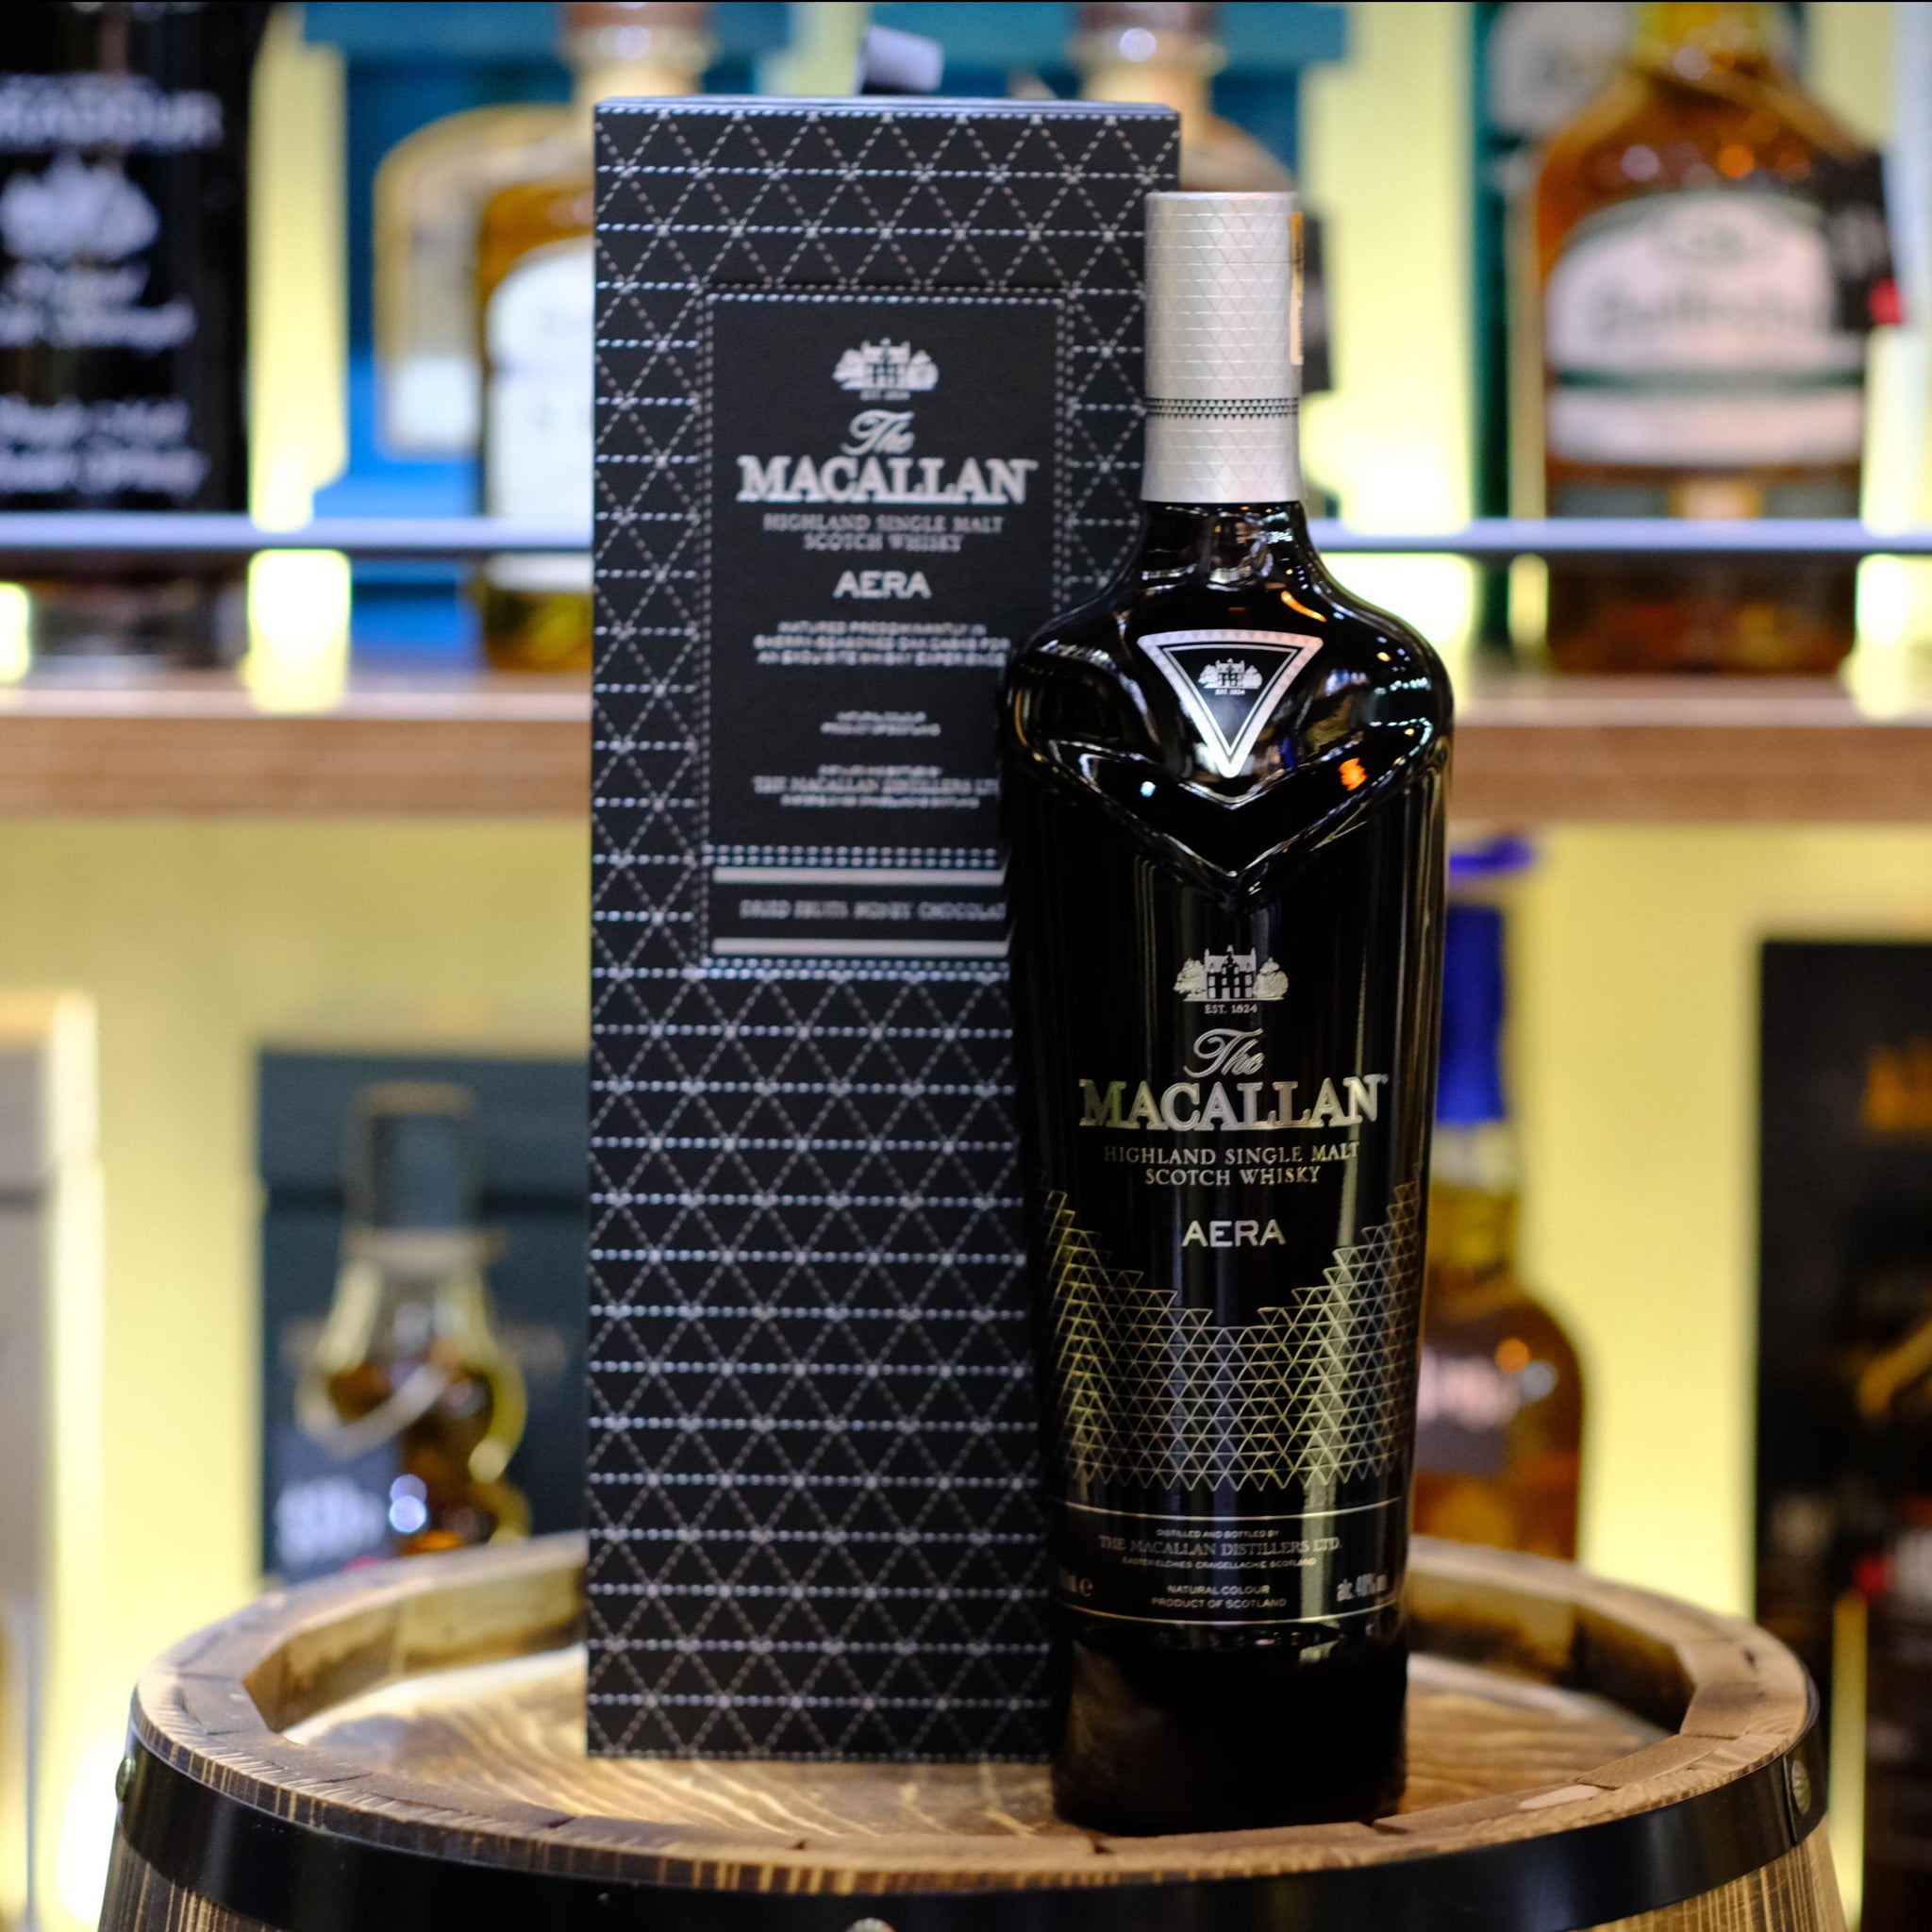 The Macallan Aera Single Malt Scotch Whisky